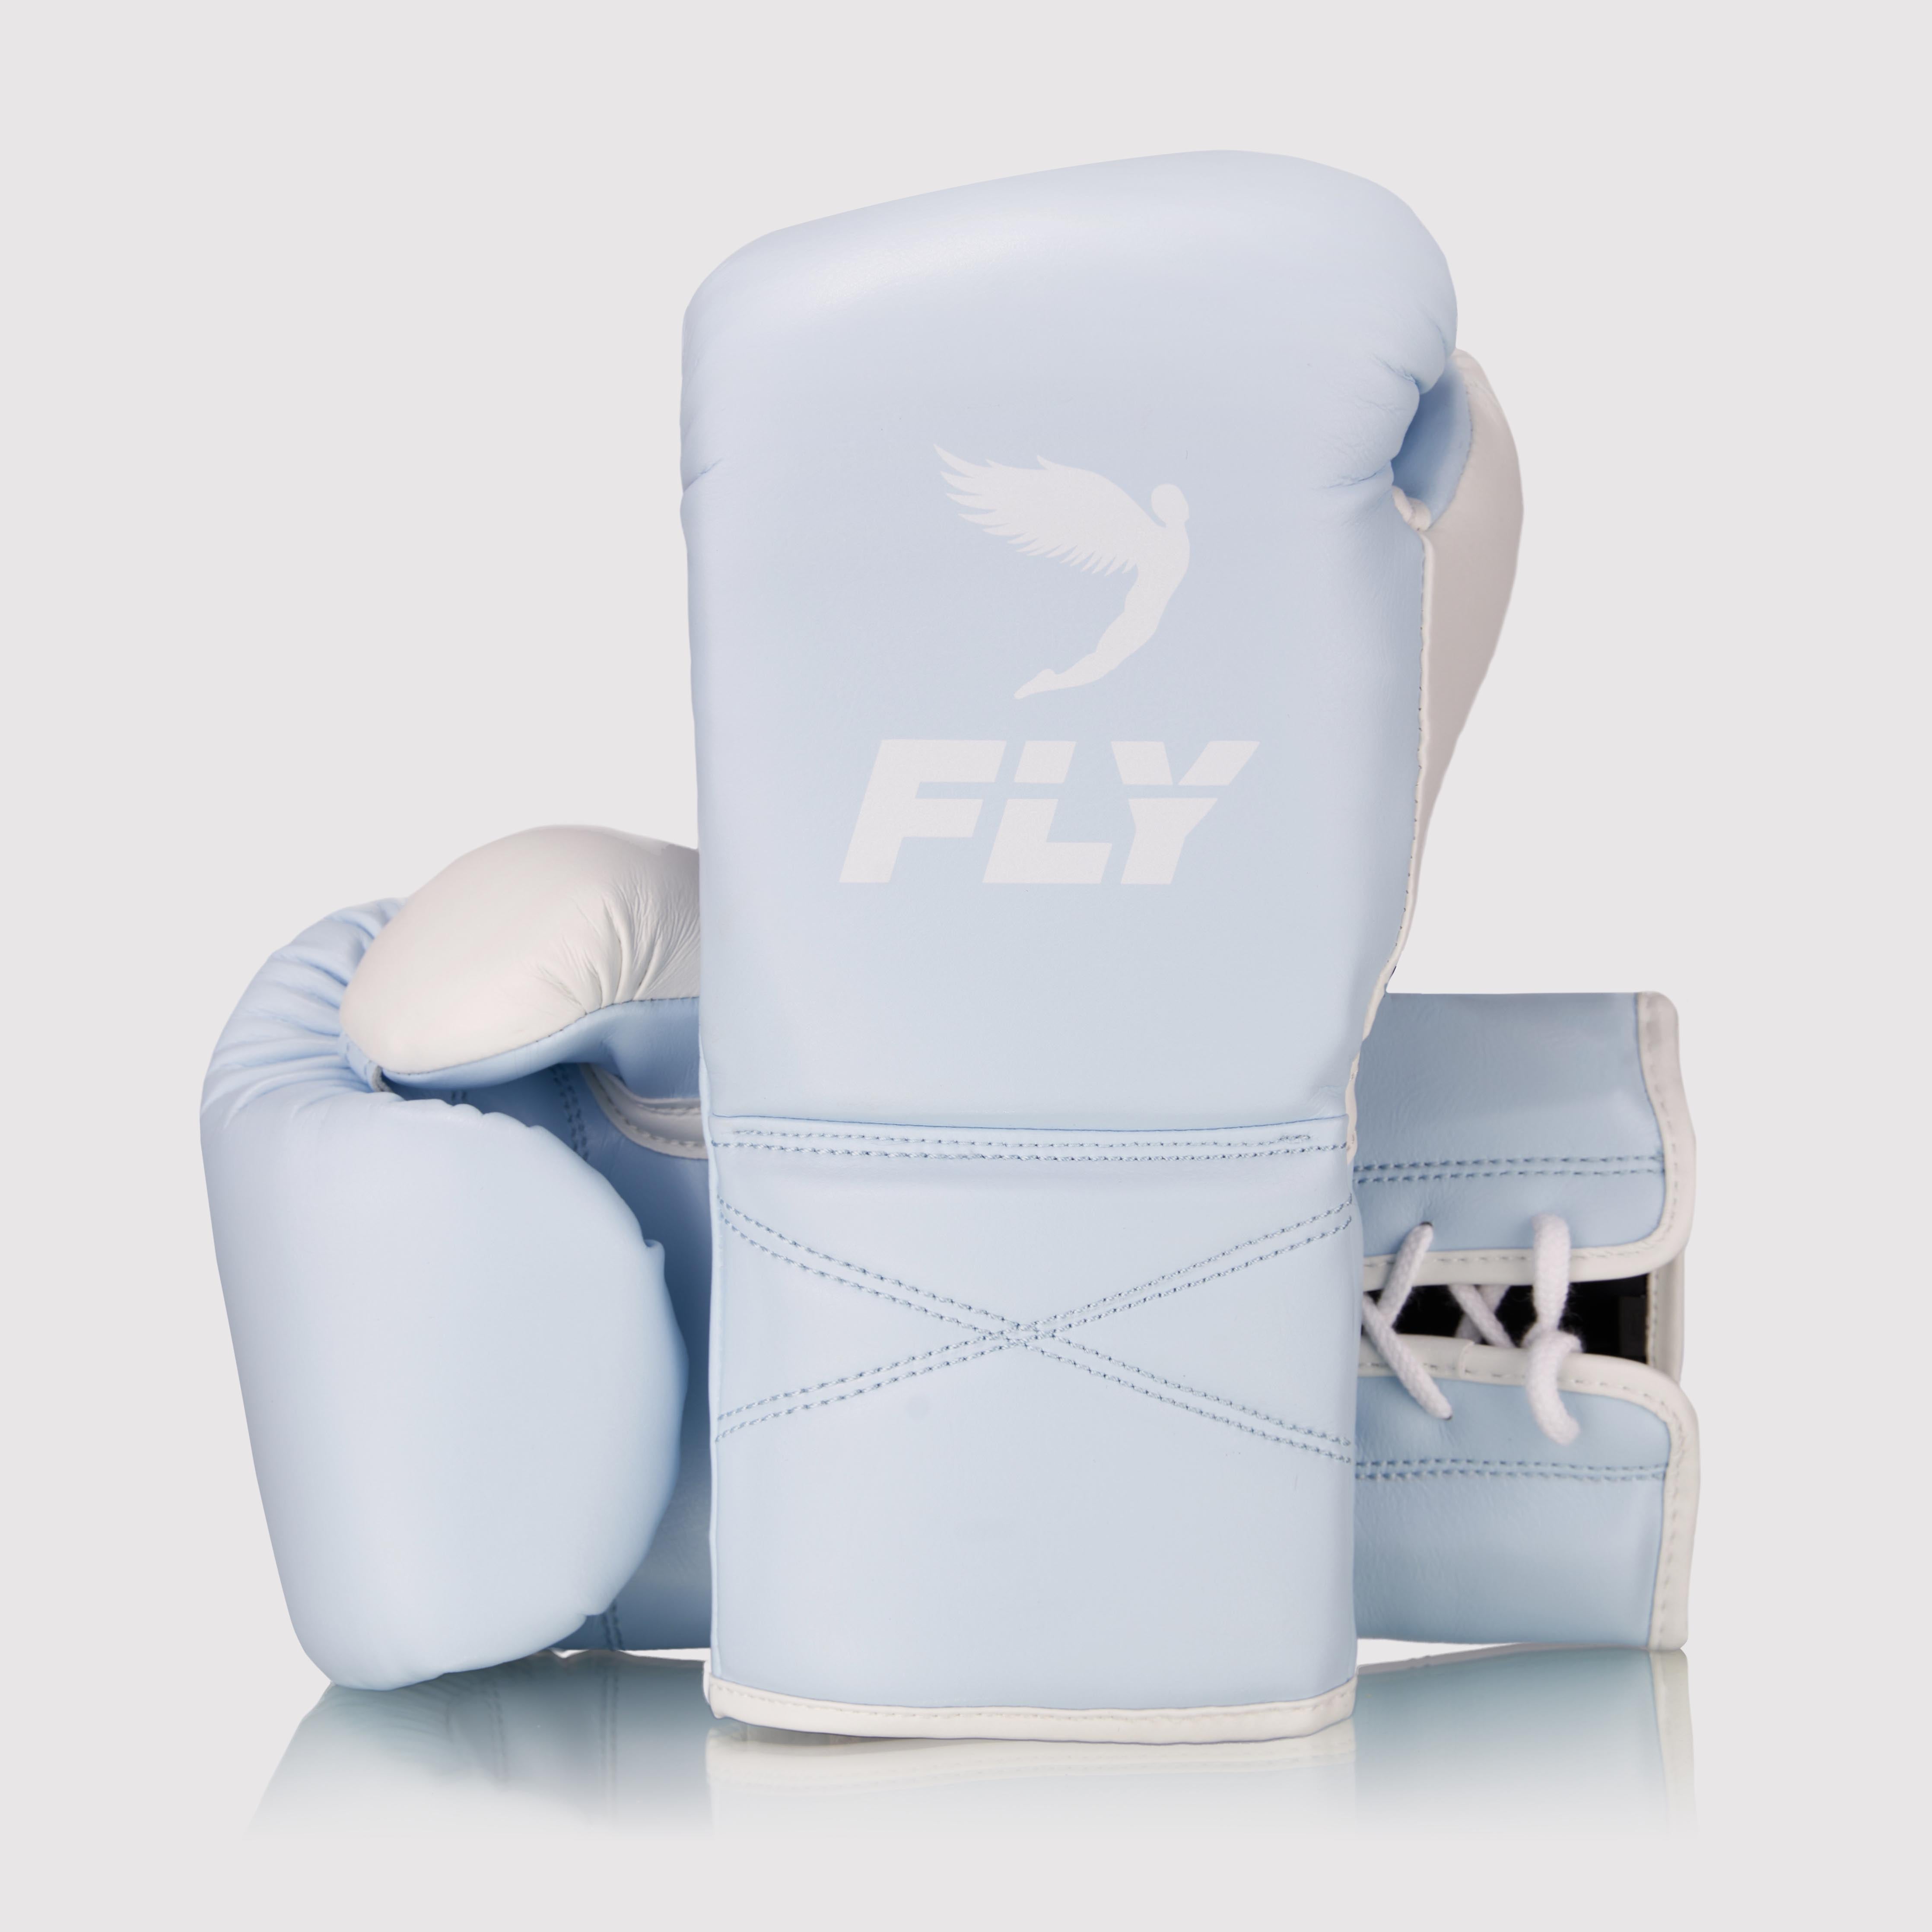 Gloves – FLY USA